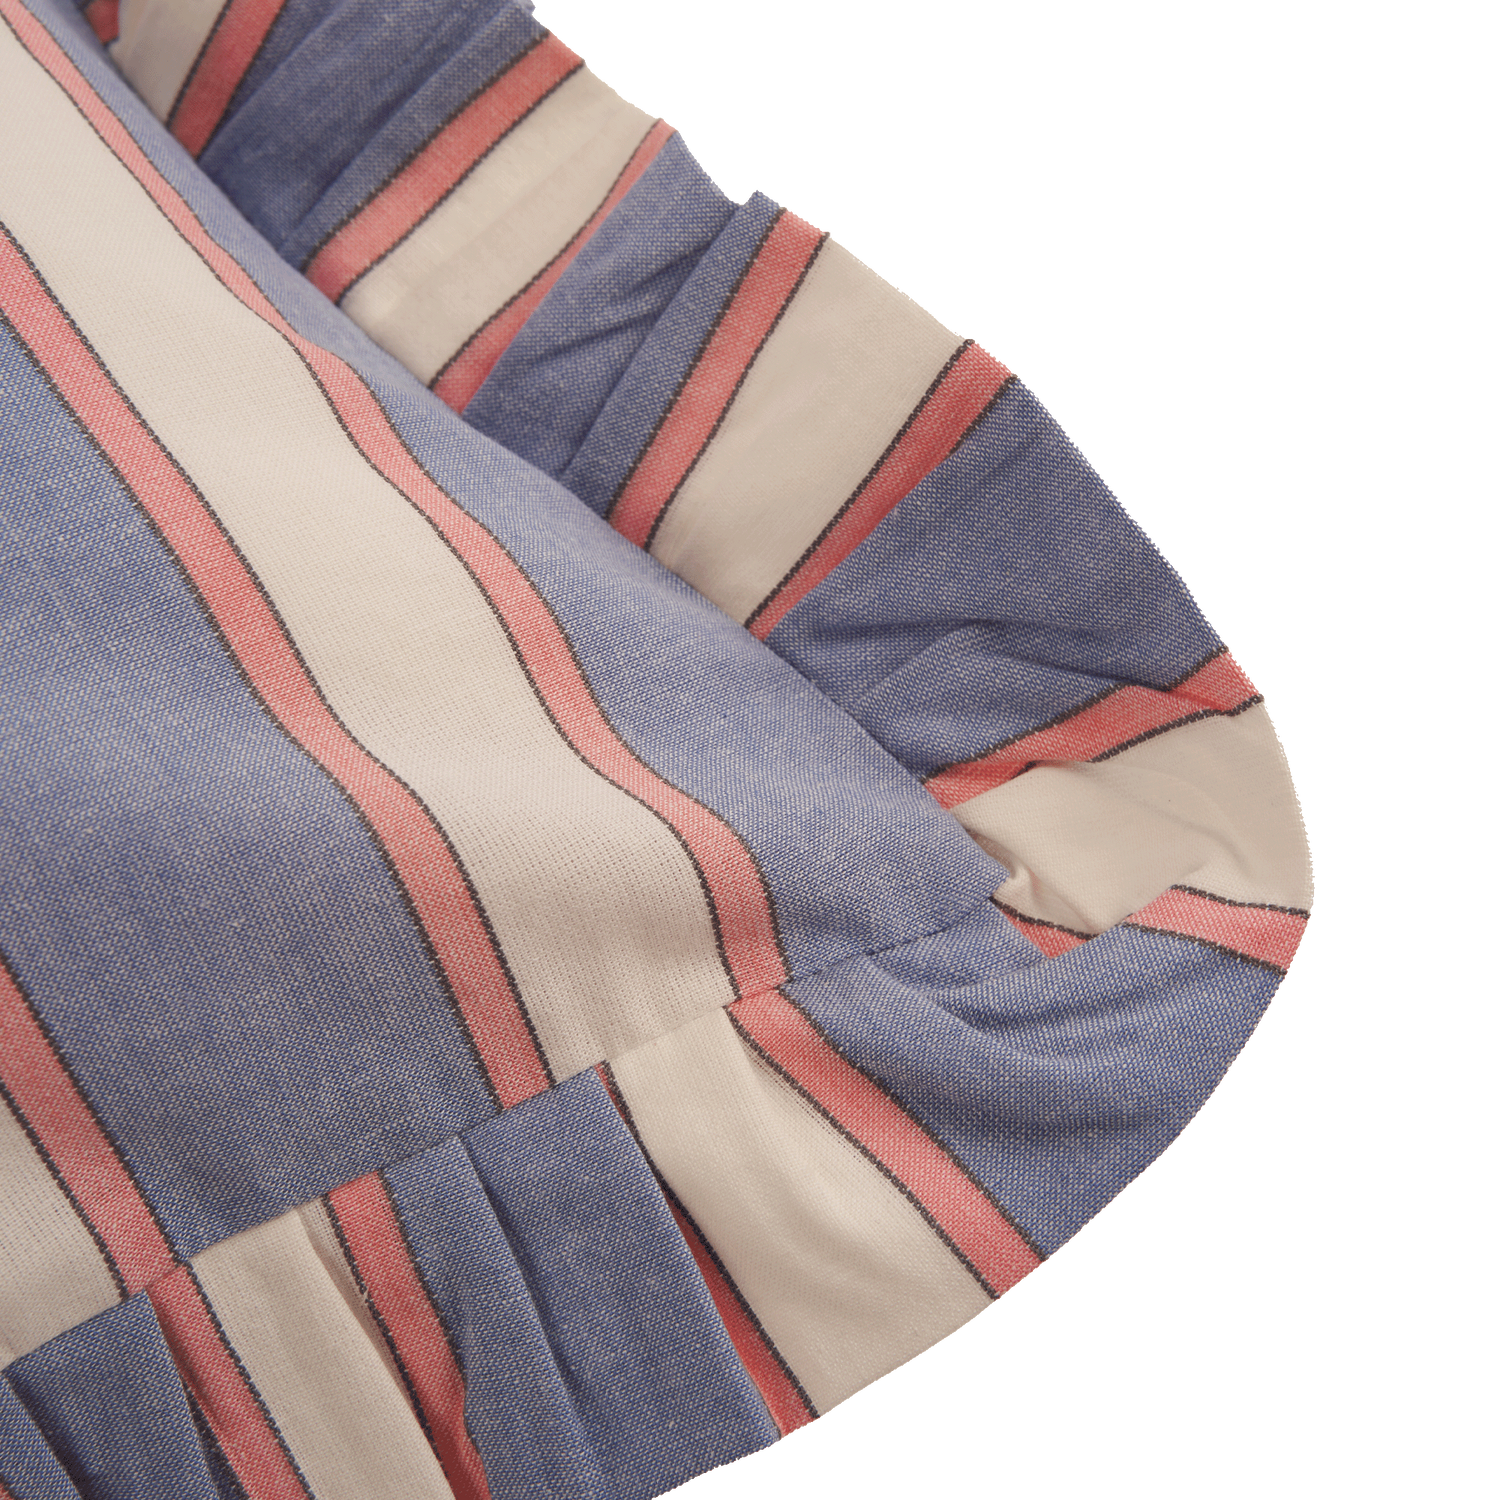 Somerset cushion cover - Blue 40x60 cm